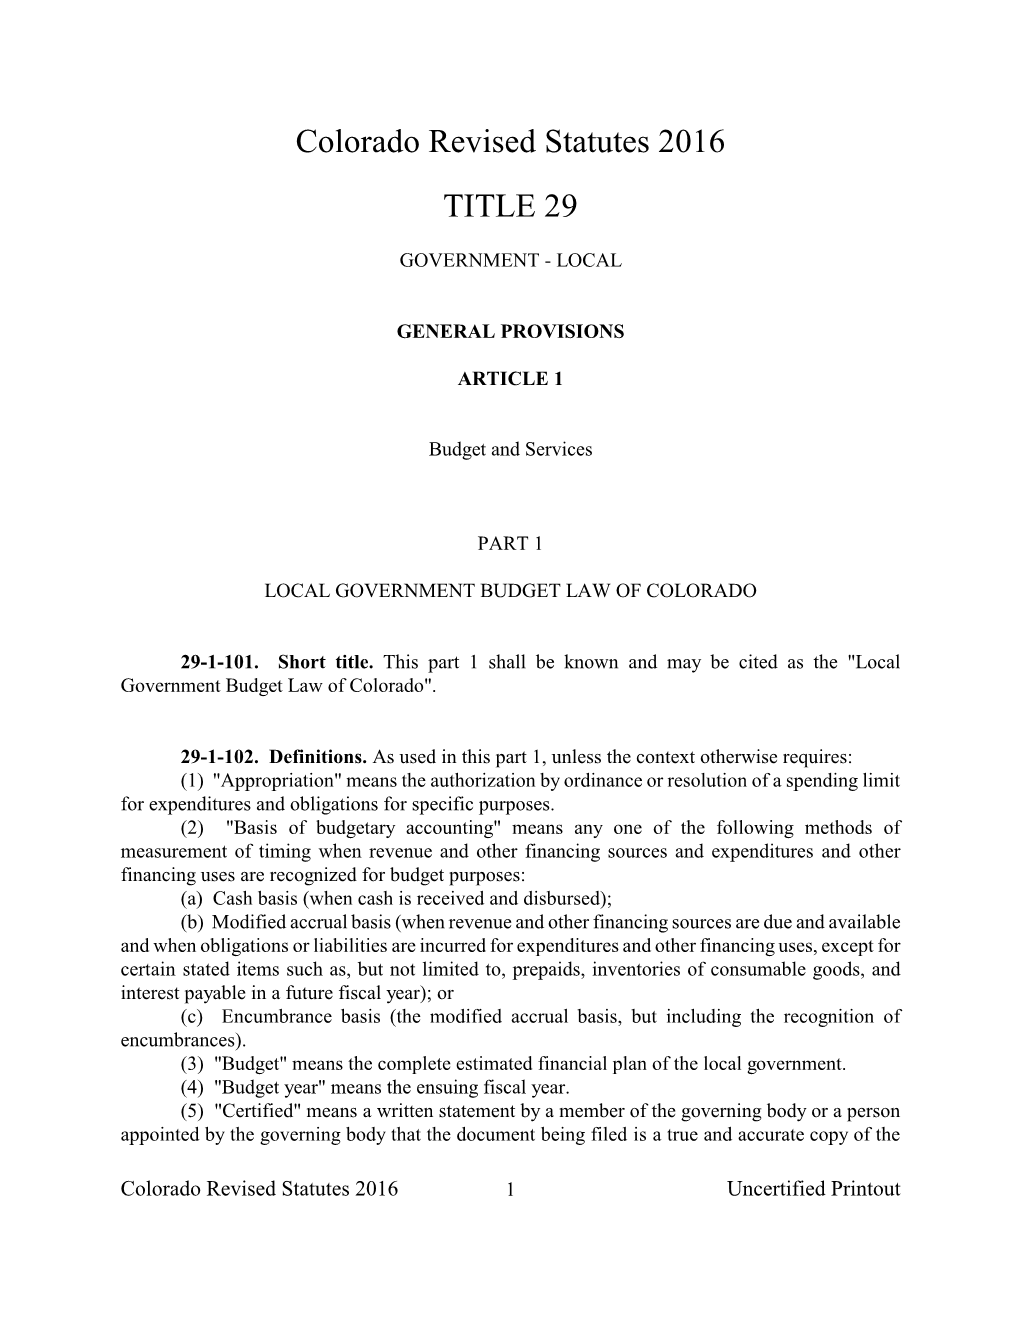 Colorado Revised Statutes 2016 TITLE 29